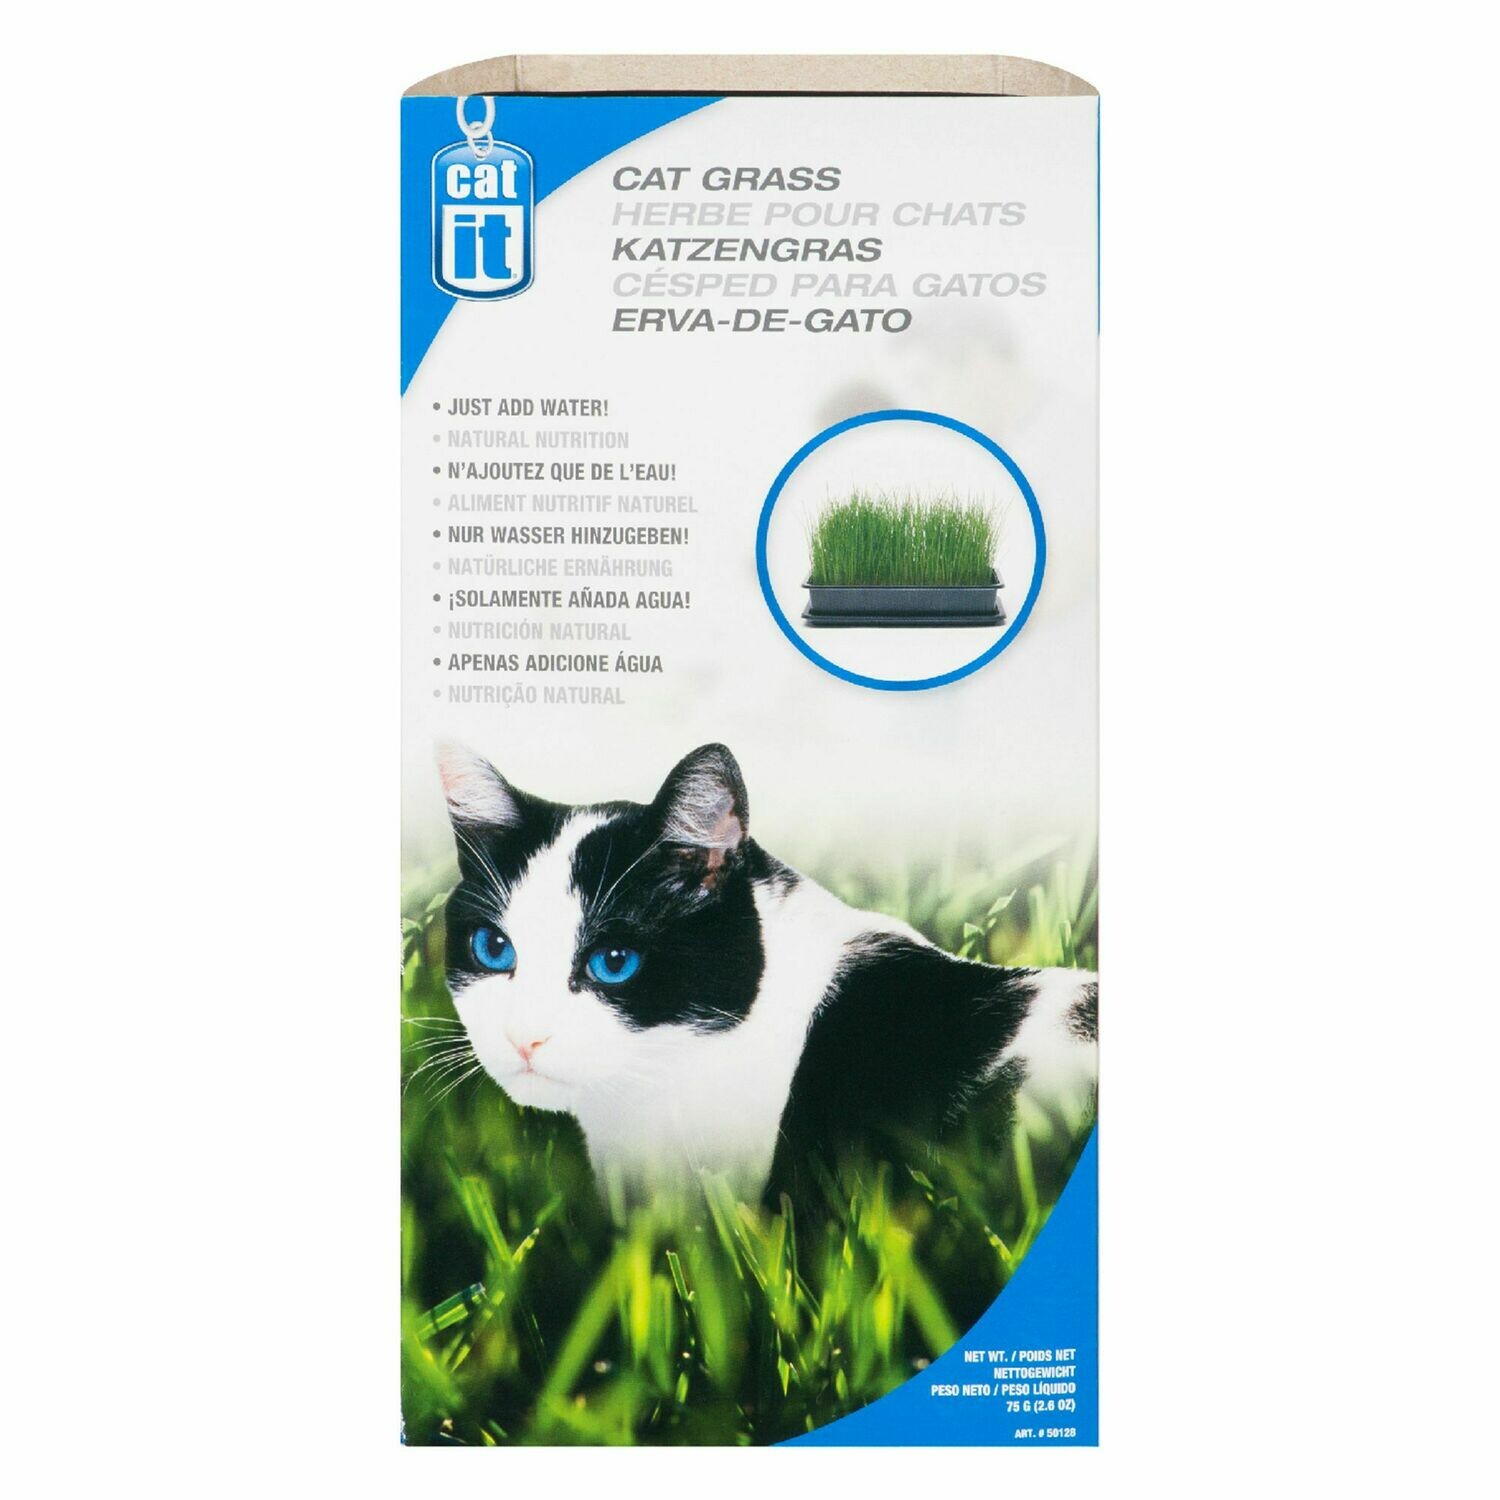 CATIT CAT GRASS 75G.